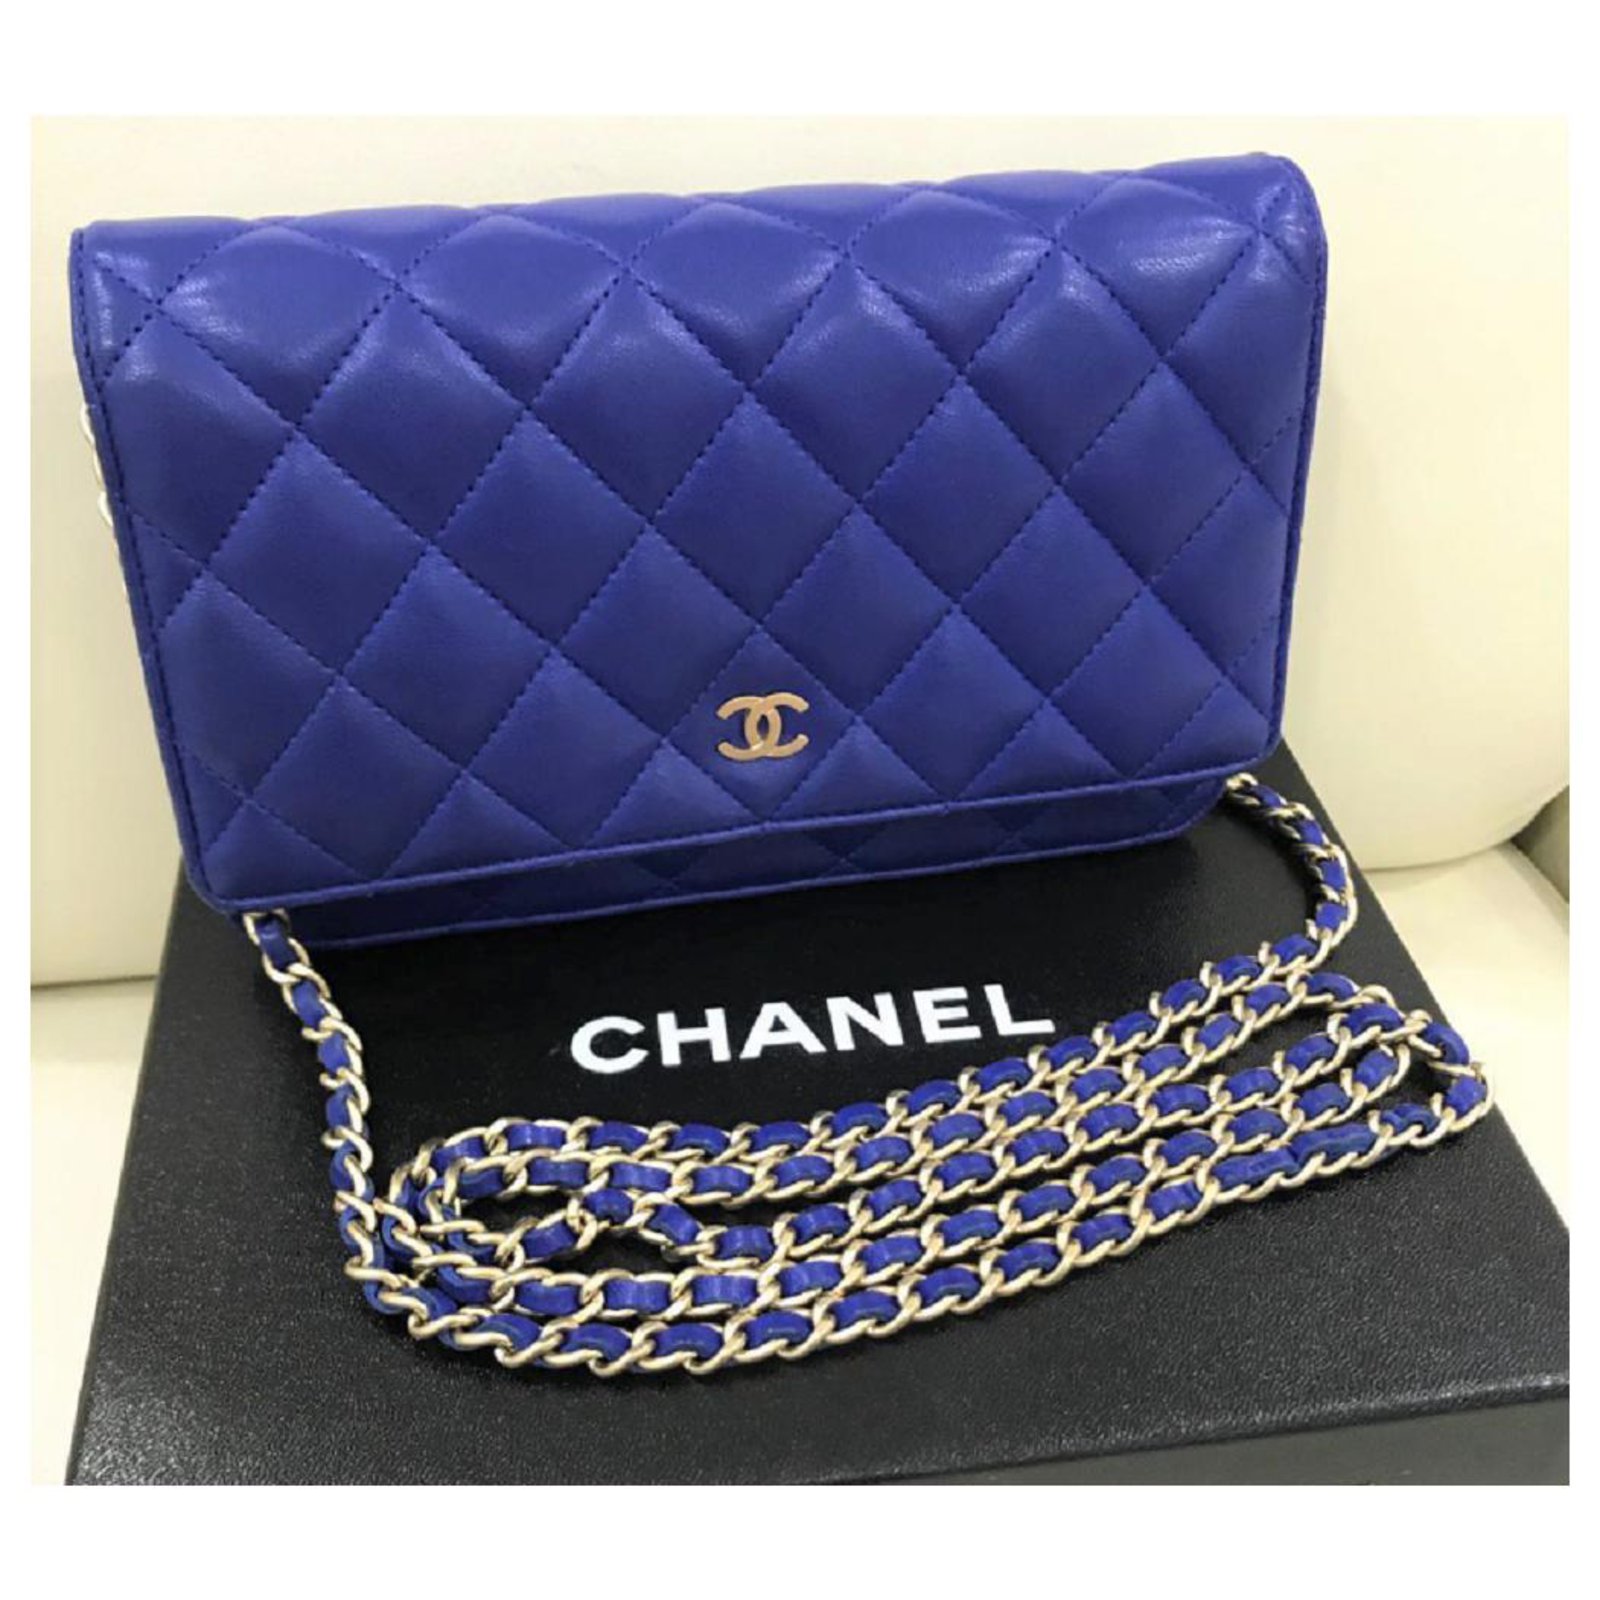 Chanel Boy Small Flap Wallet in Navy Blue Grained Calfskin  SOLD